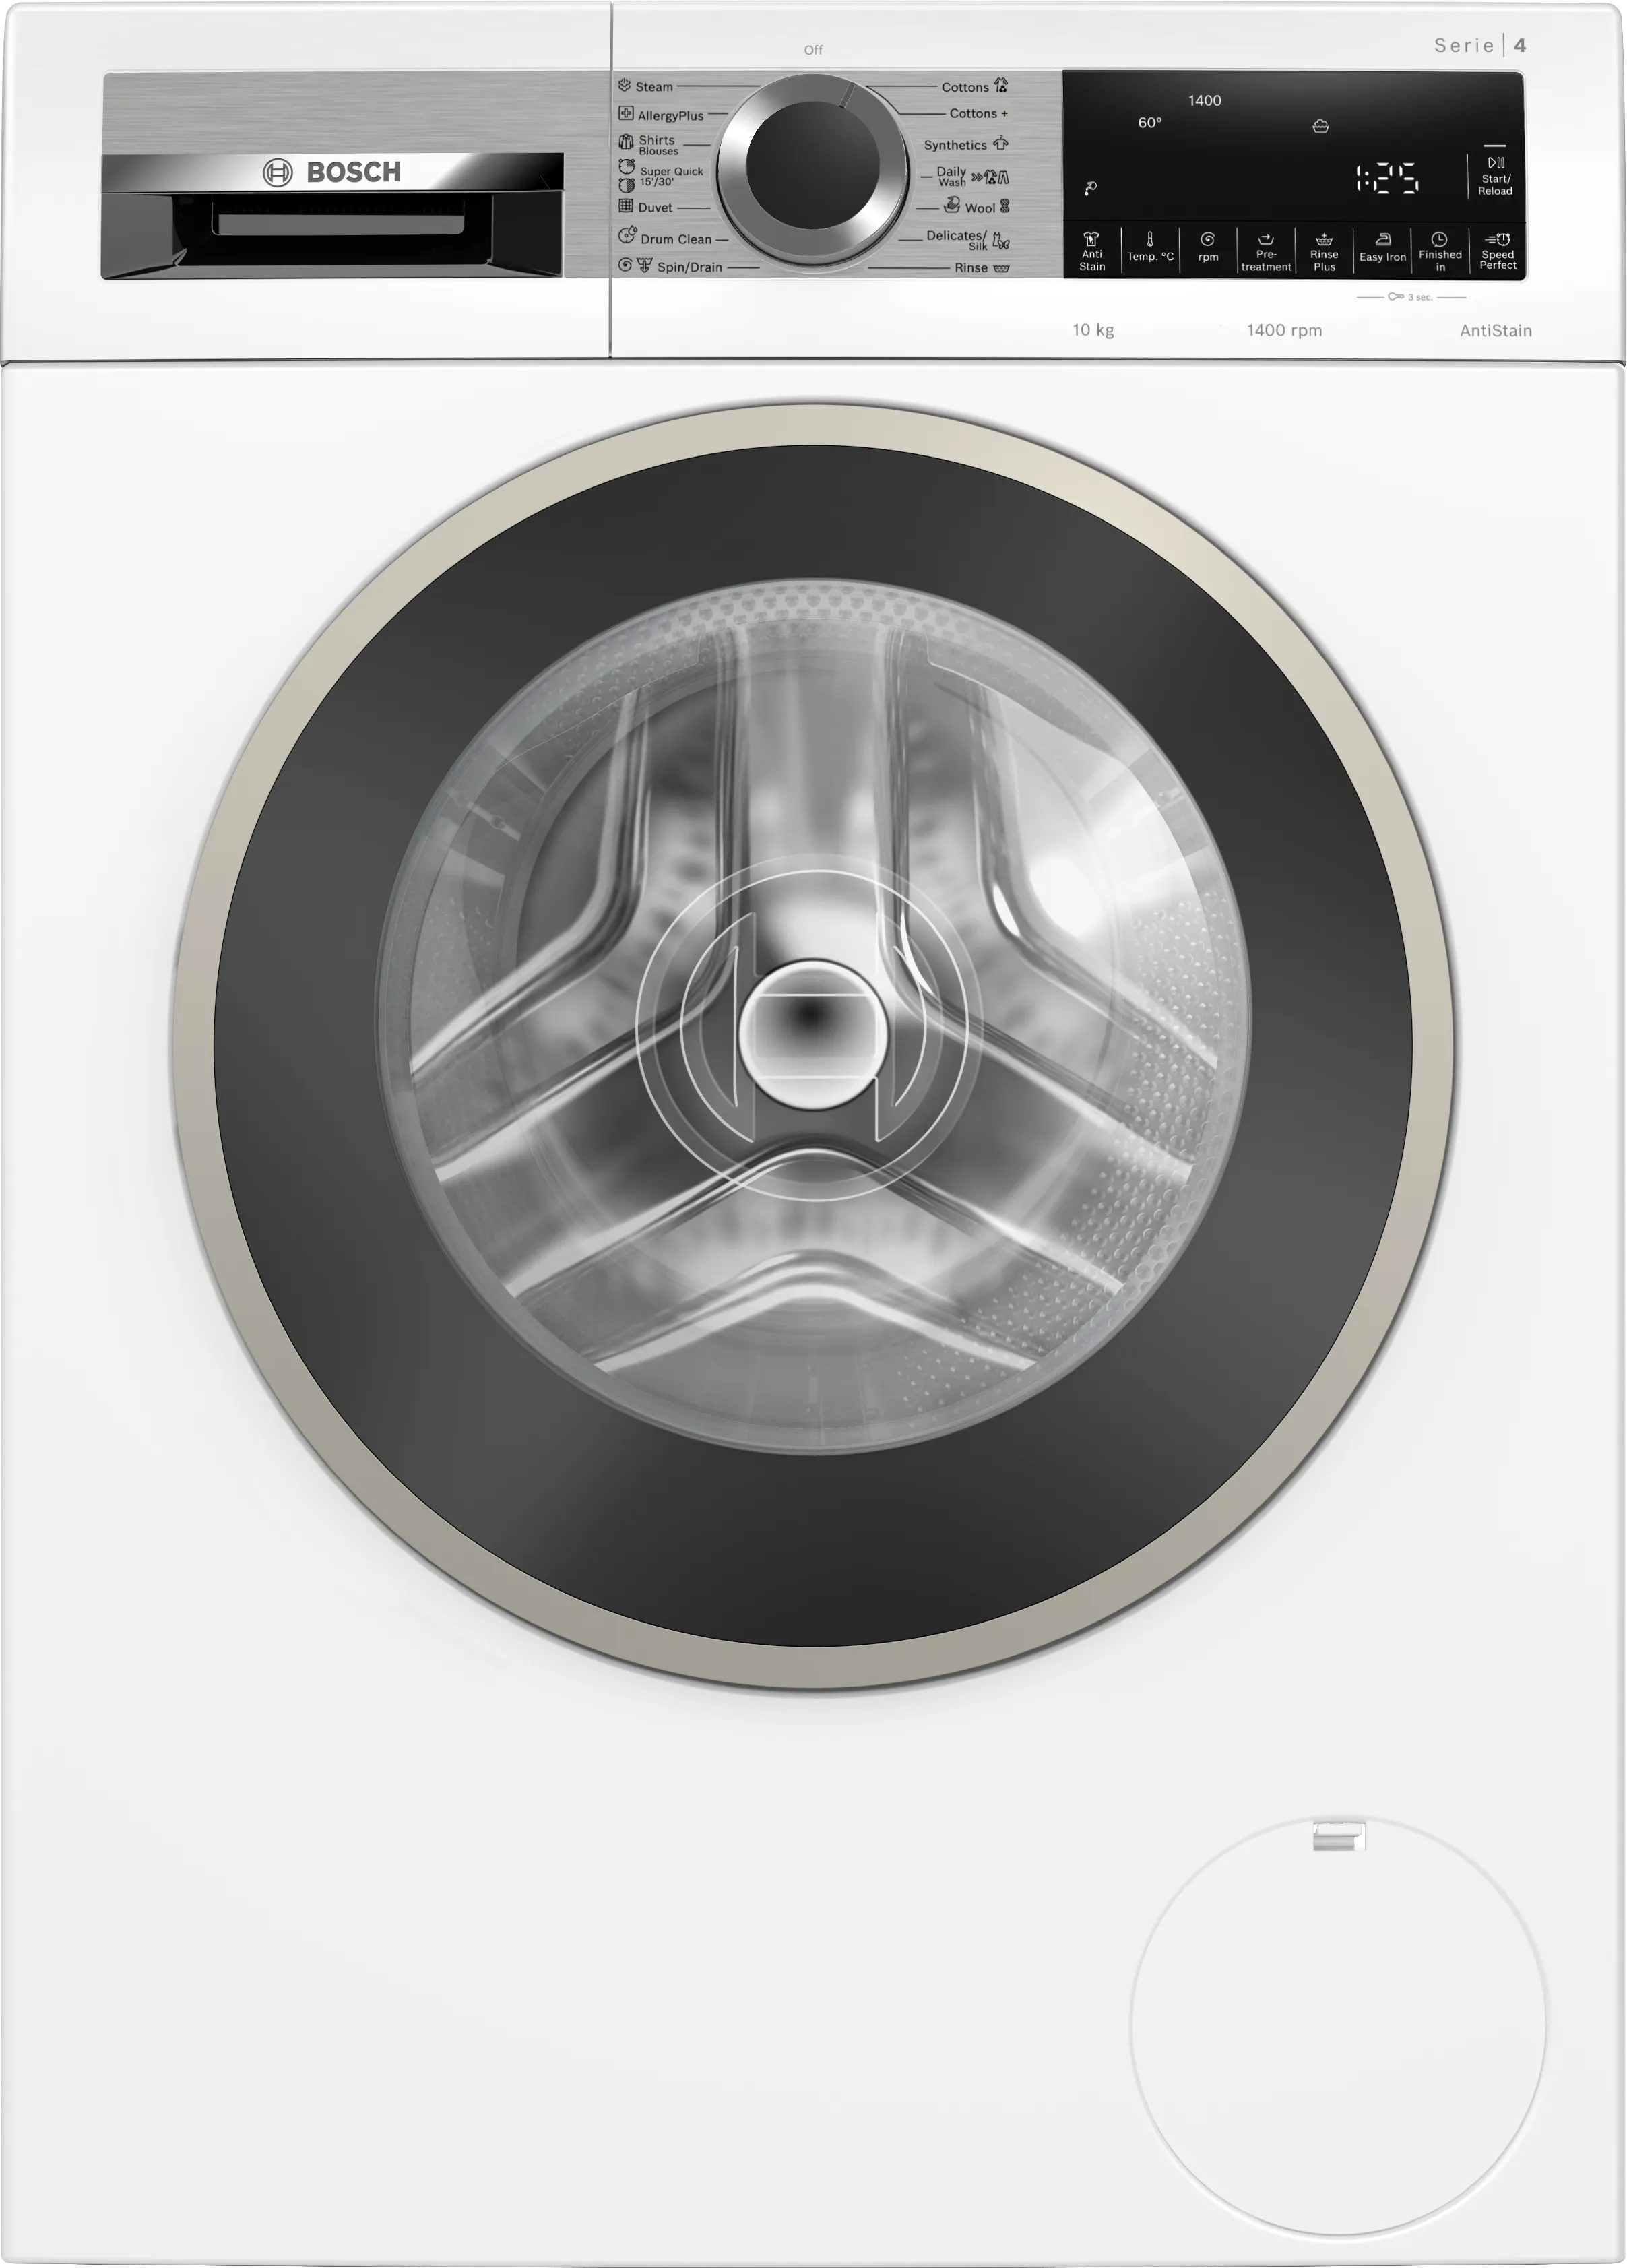 Series 4 washing machine, frontloader fullsize 10 kg 1400 rpm 